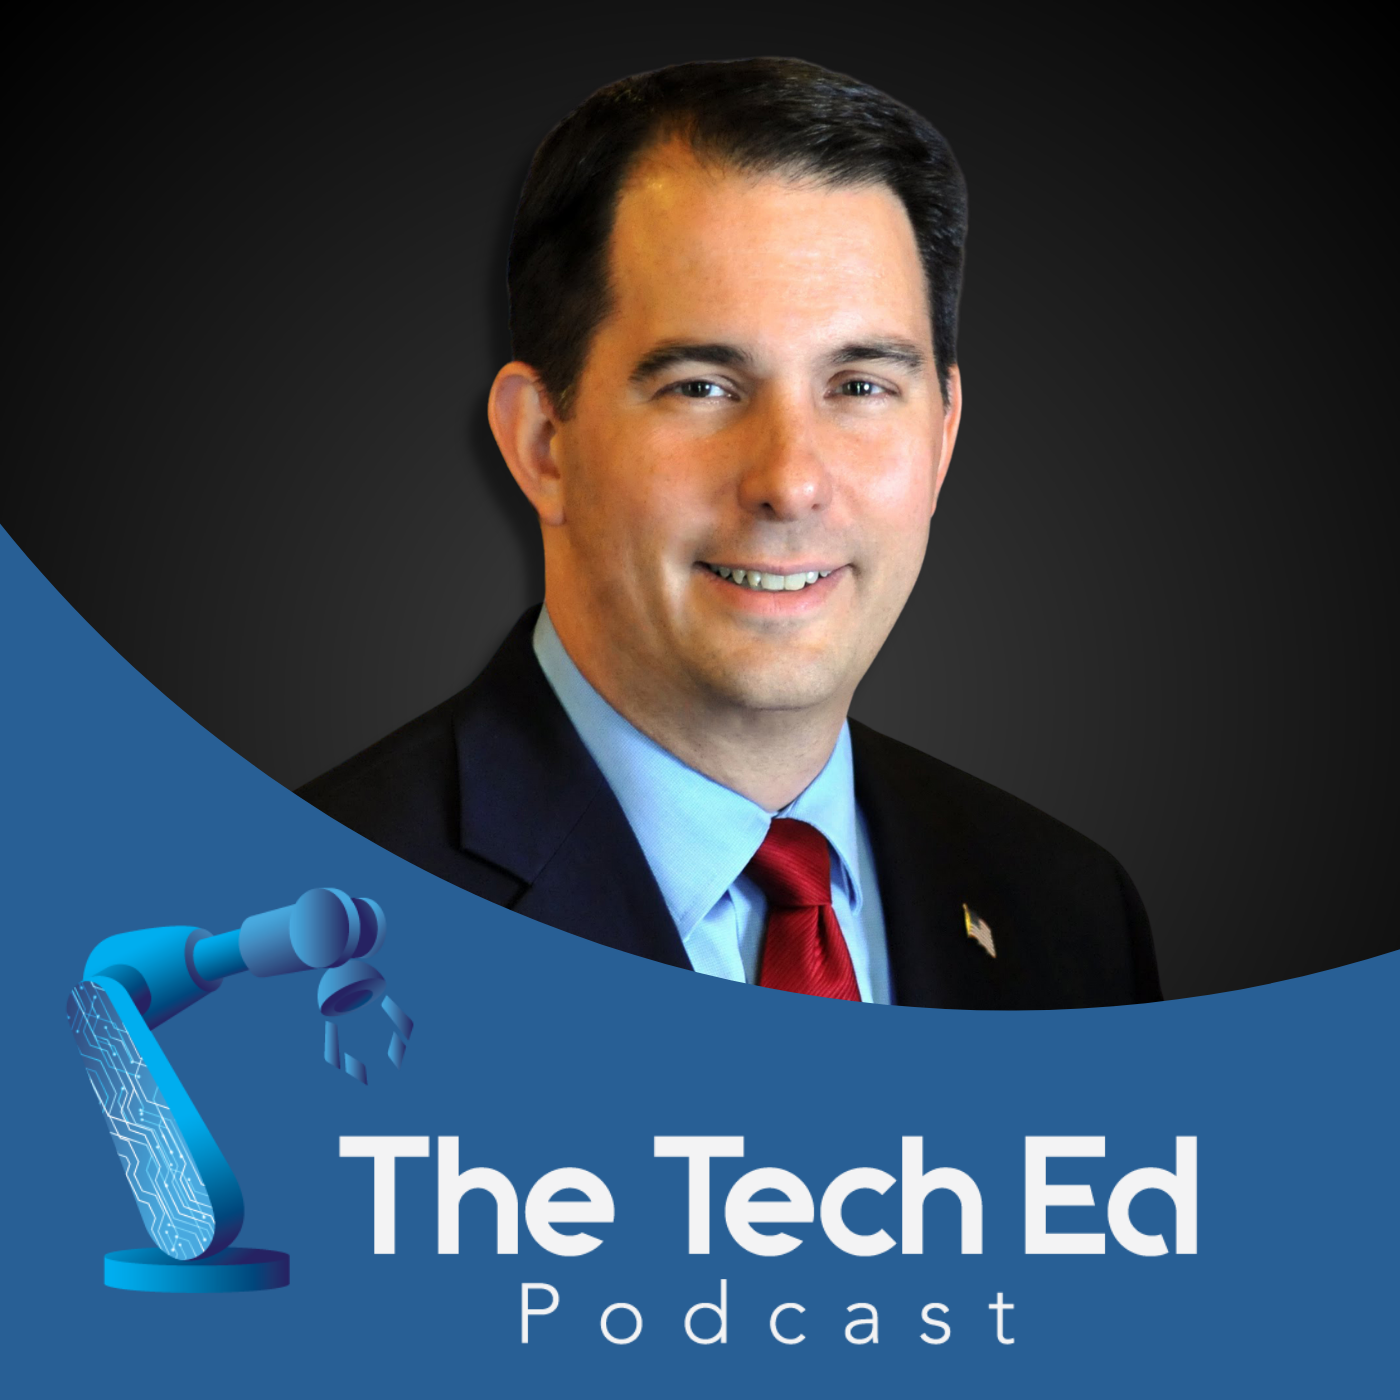 Gov Scott Walker on The TechEd Podcast